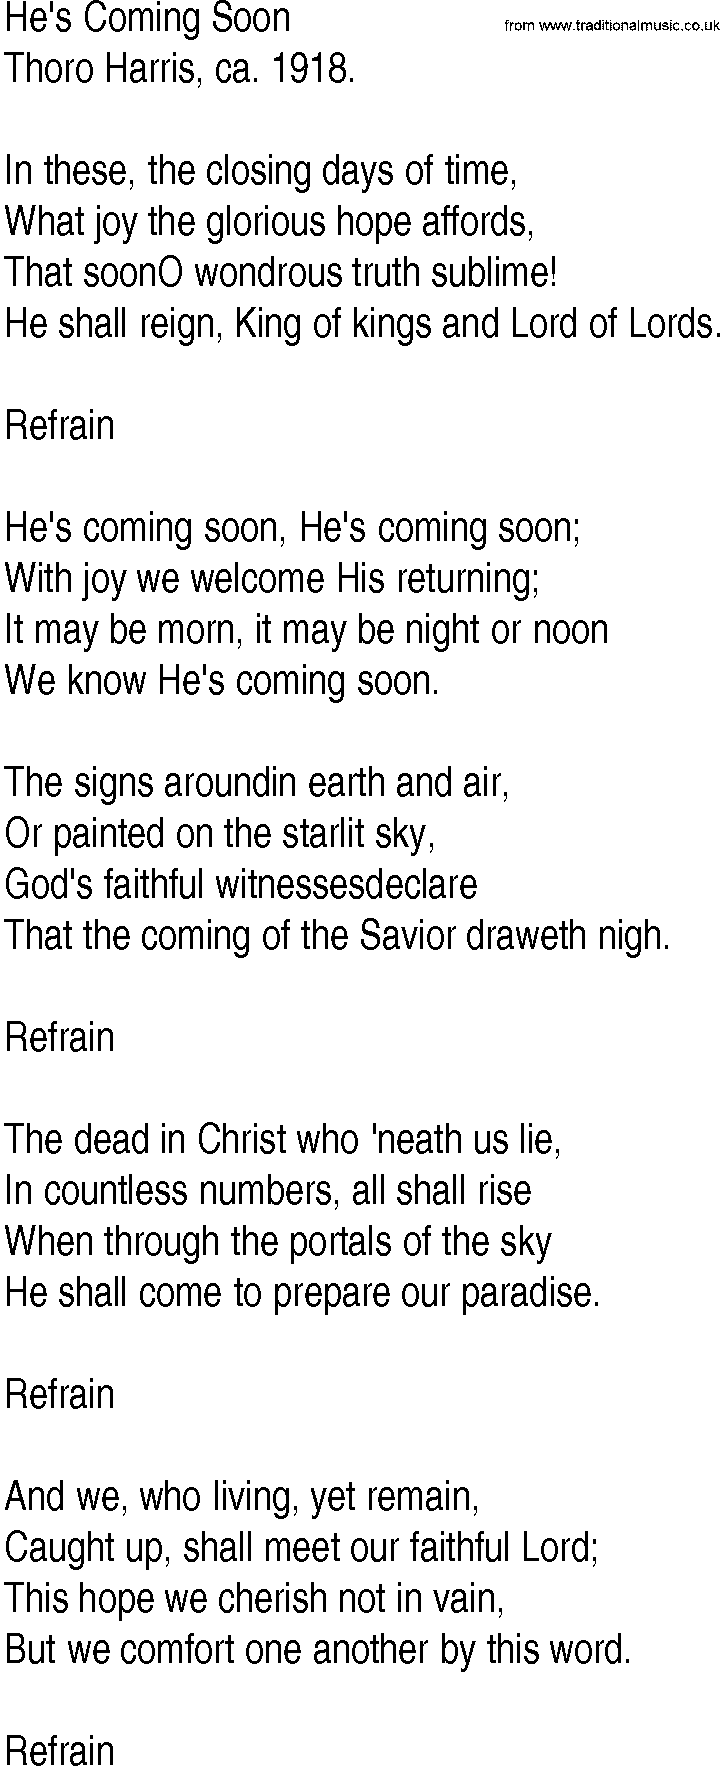 Hymn and Gospel Song: He's Coming Soon by Thoro Harris lyrics